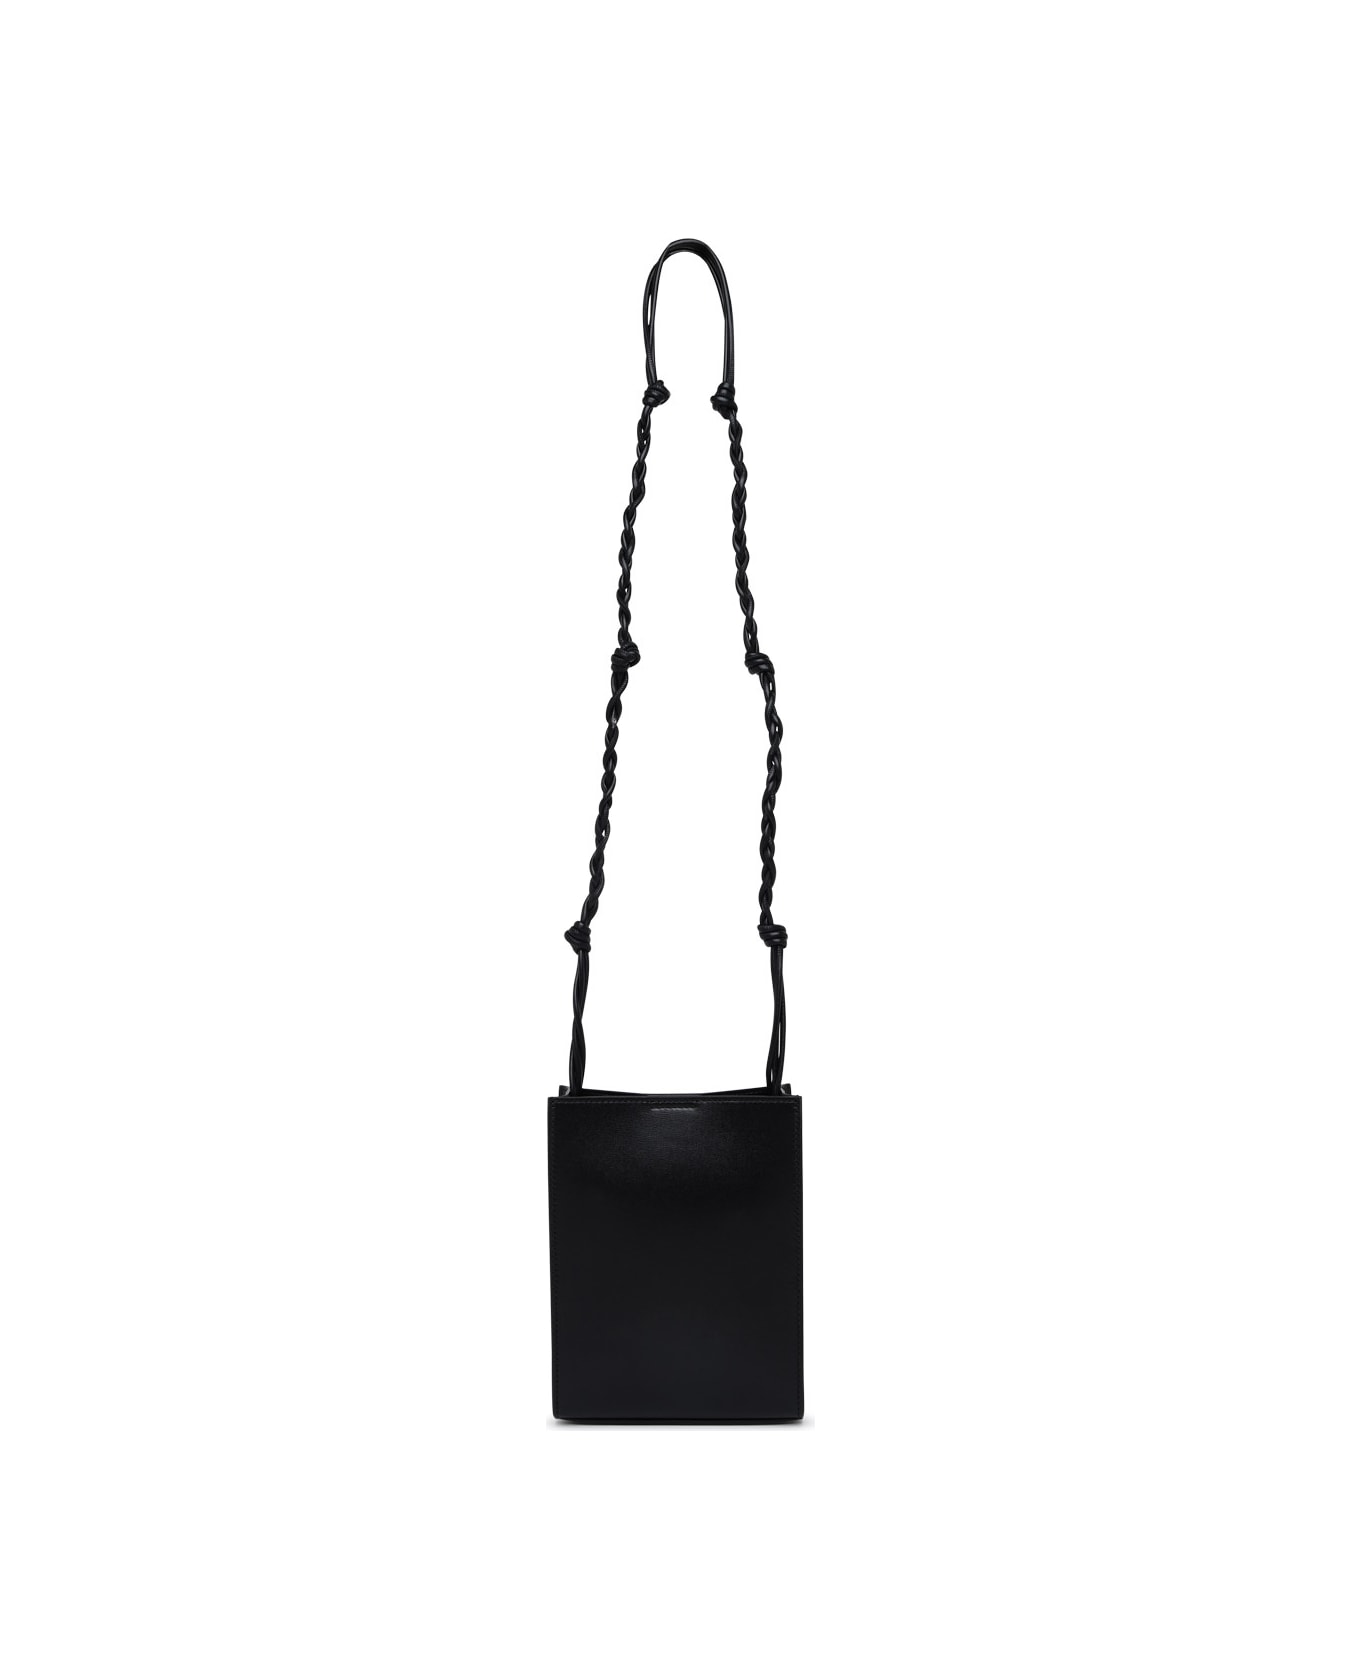 Jil Sander Black Leather Small Tangle Crossbody Bag - Black ショルダーバッグ